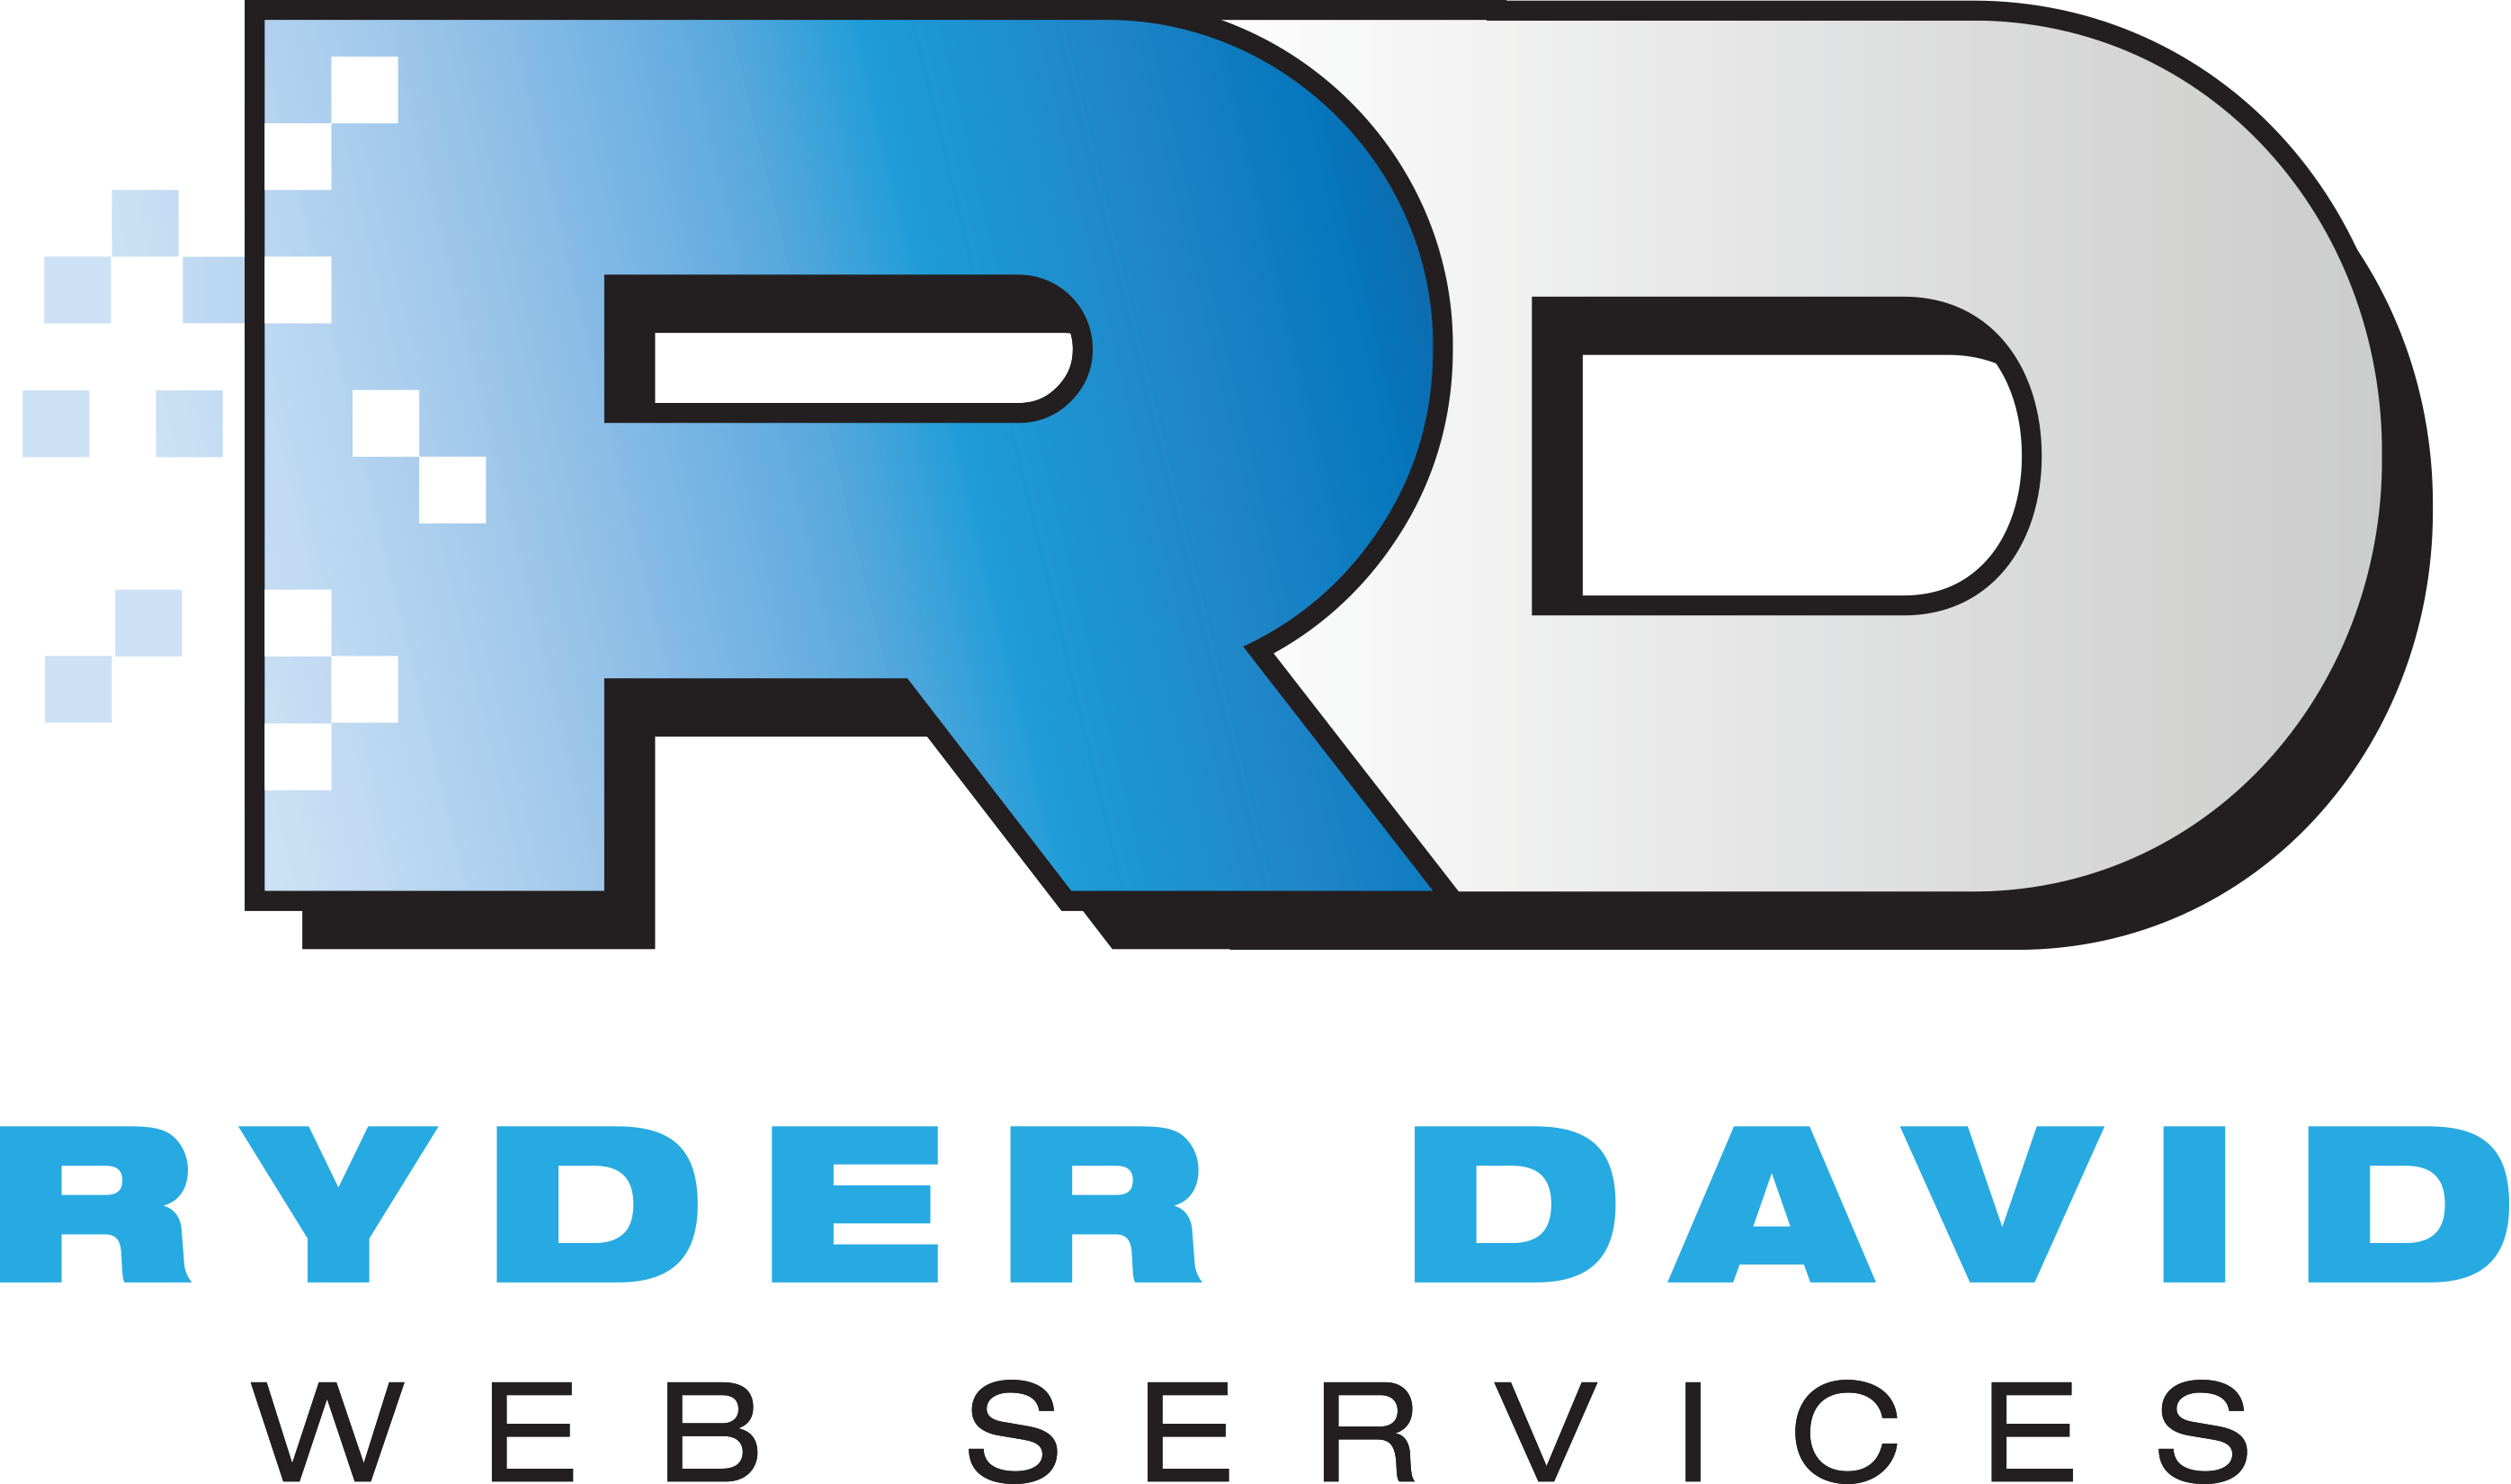 Ryder Davis Web Services